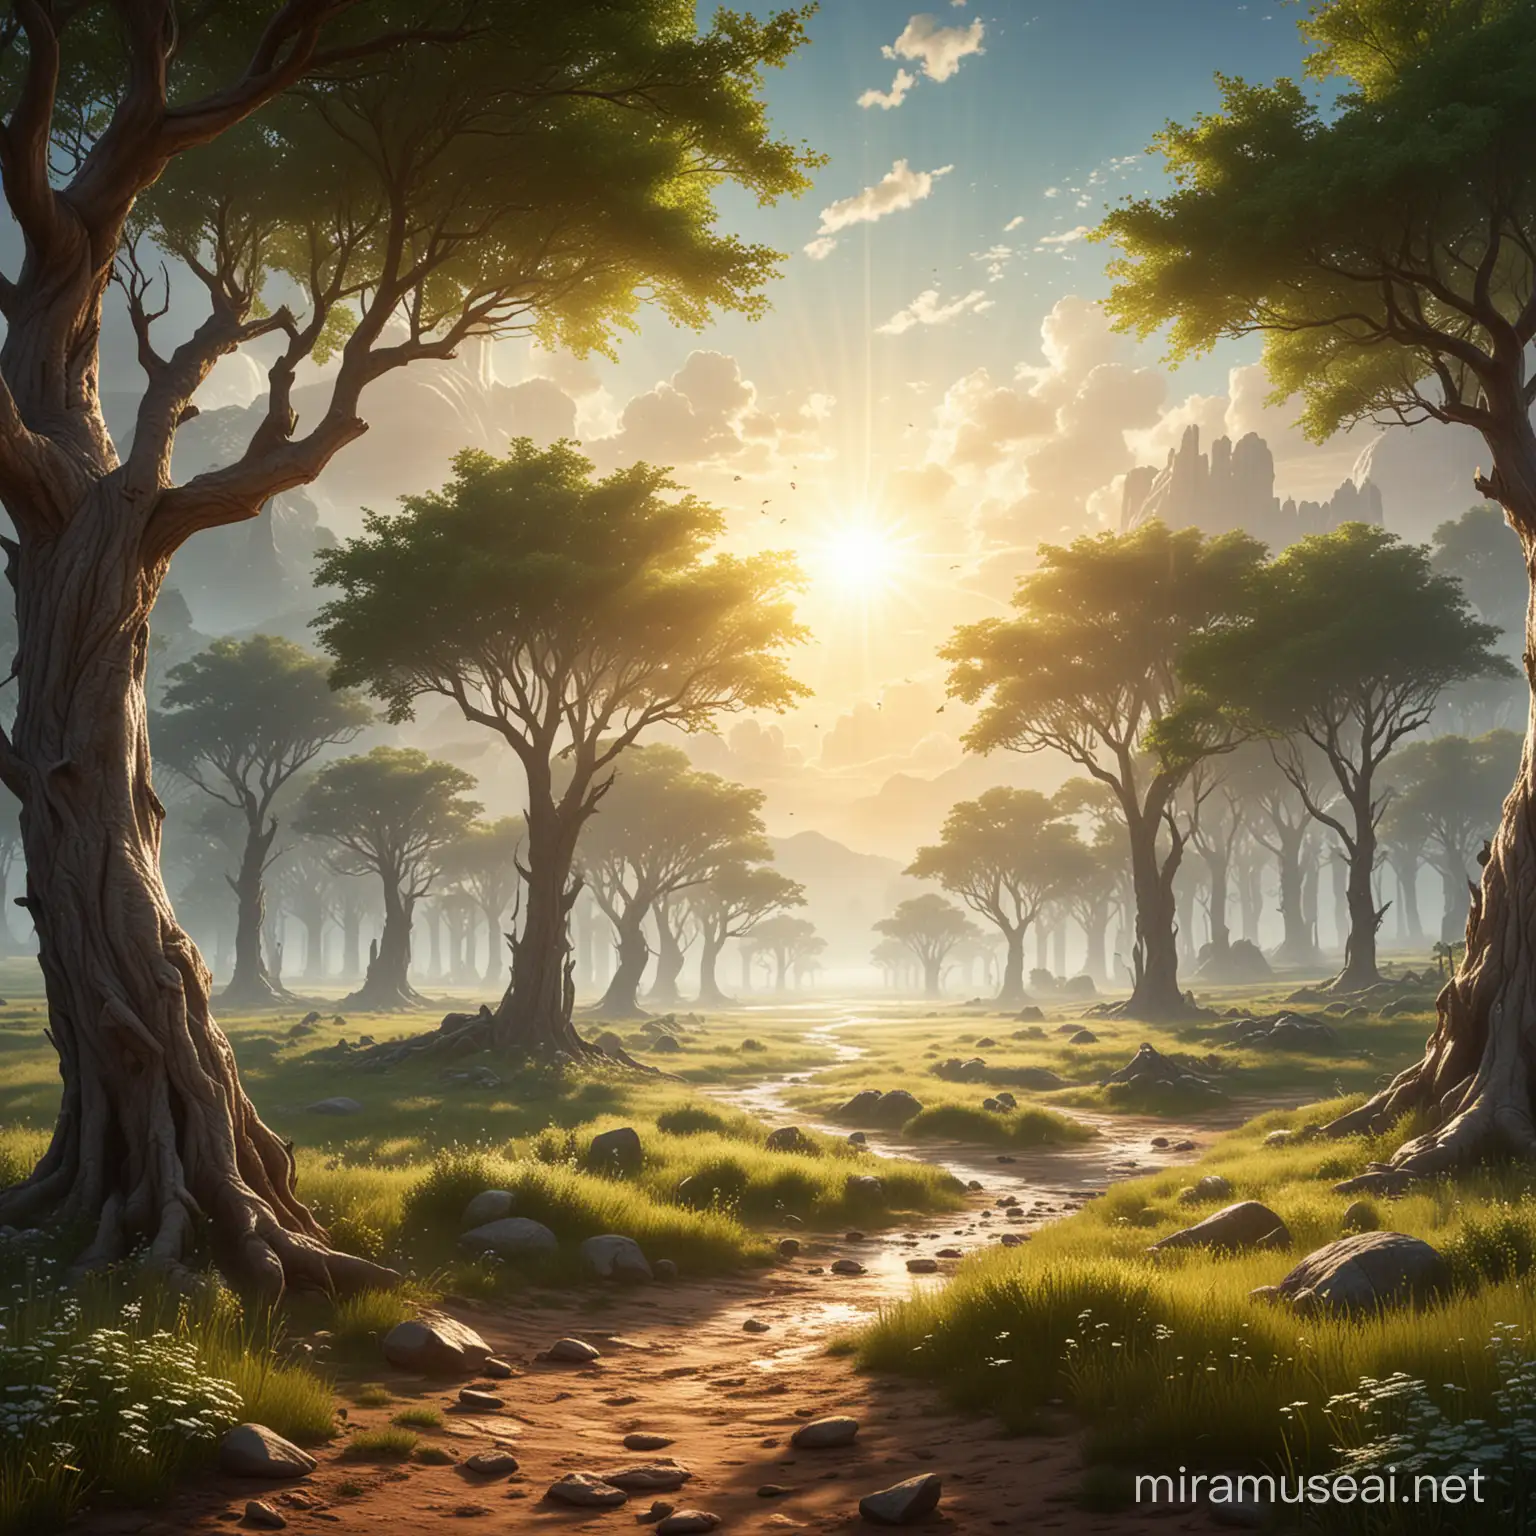 Divine Sunlit Fantasy Landscape with Majestic Trees